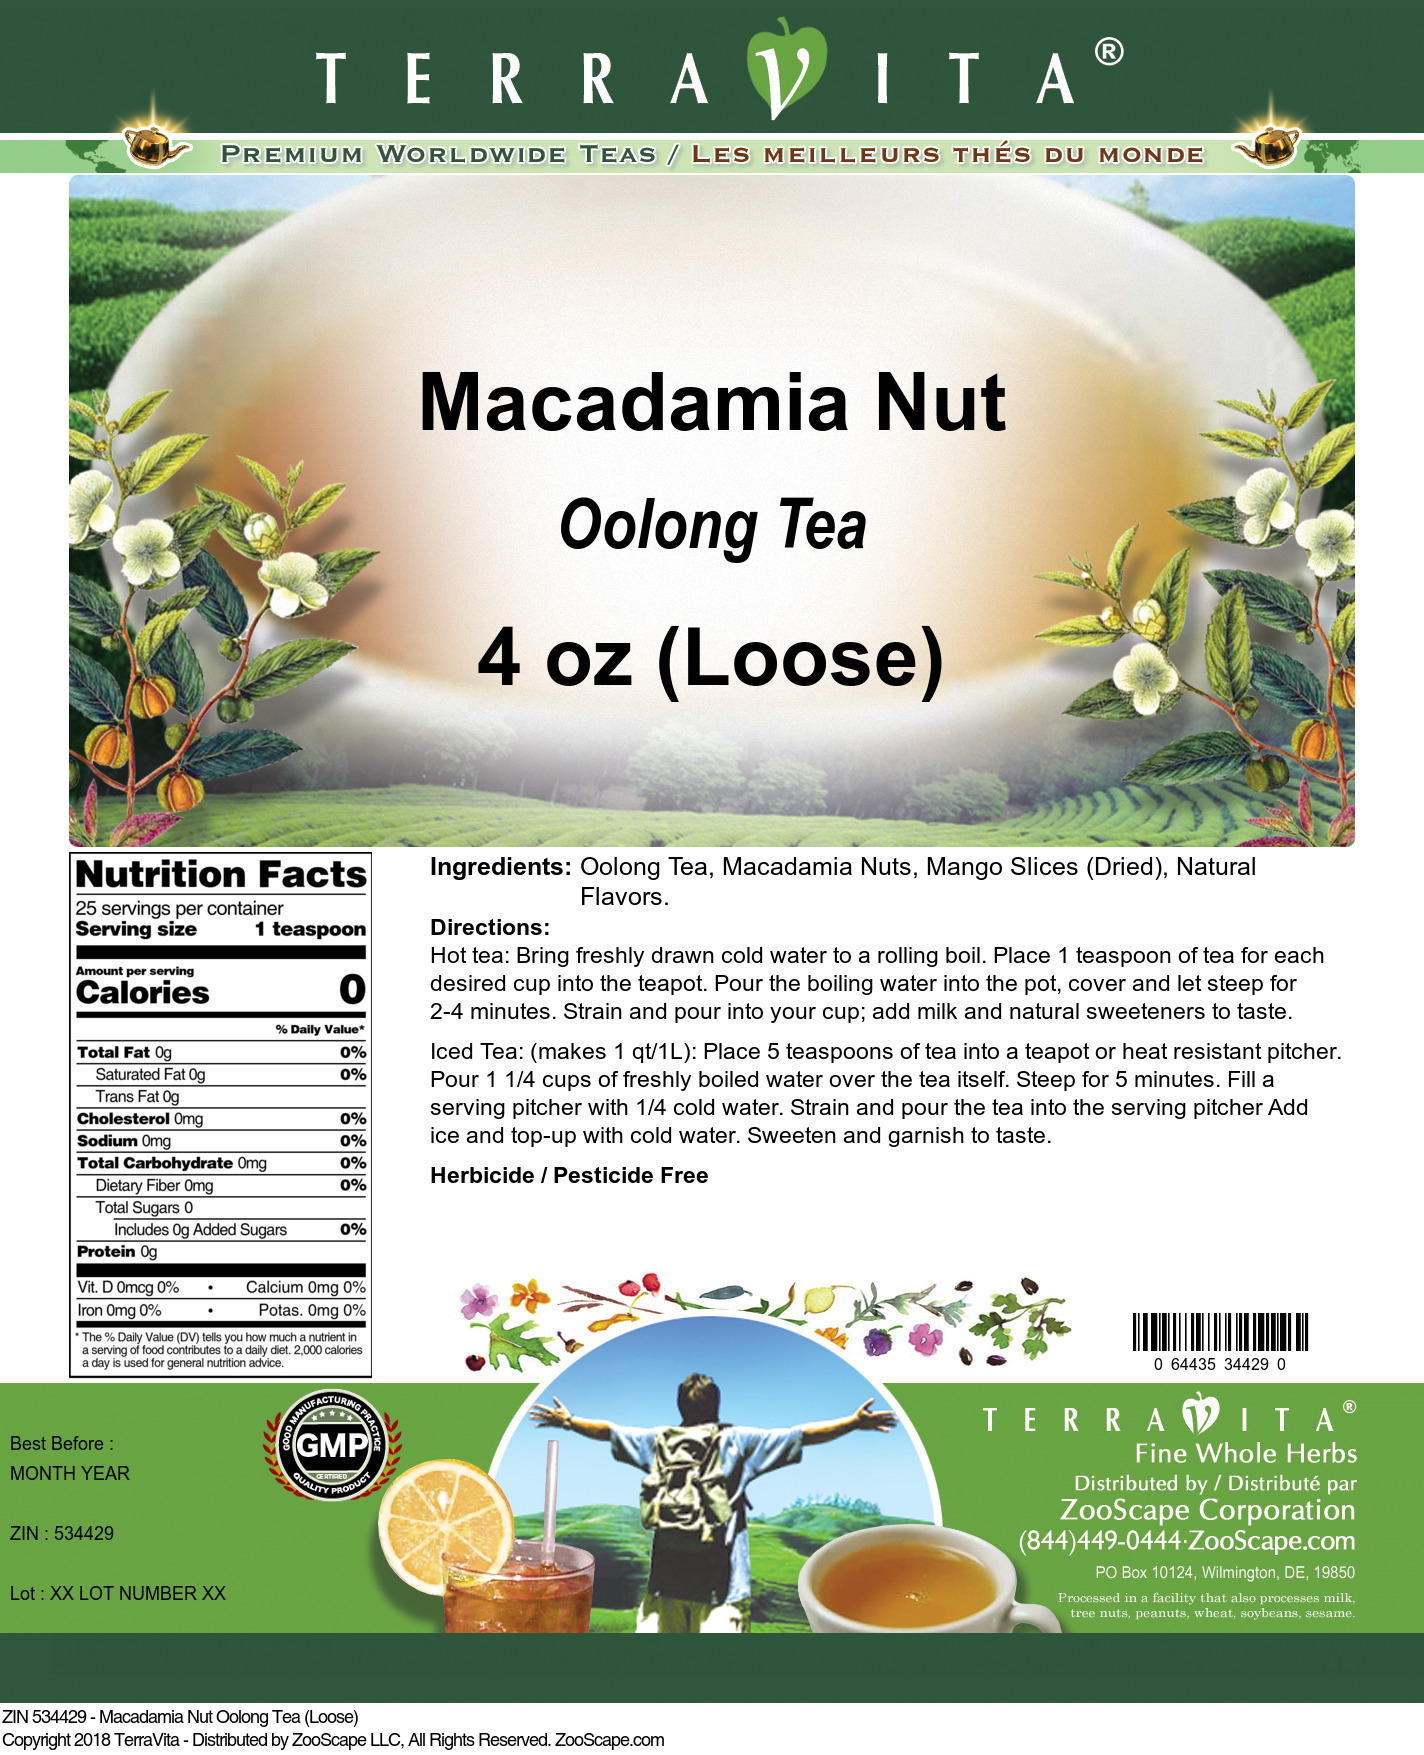 Macadamia Nut Oolong Tea (Loose) - Label